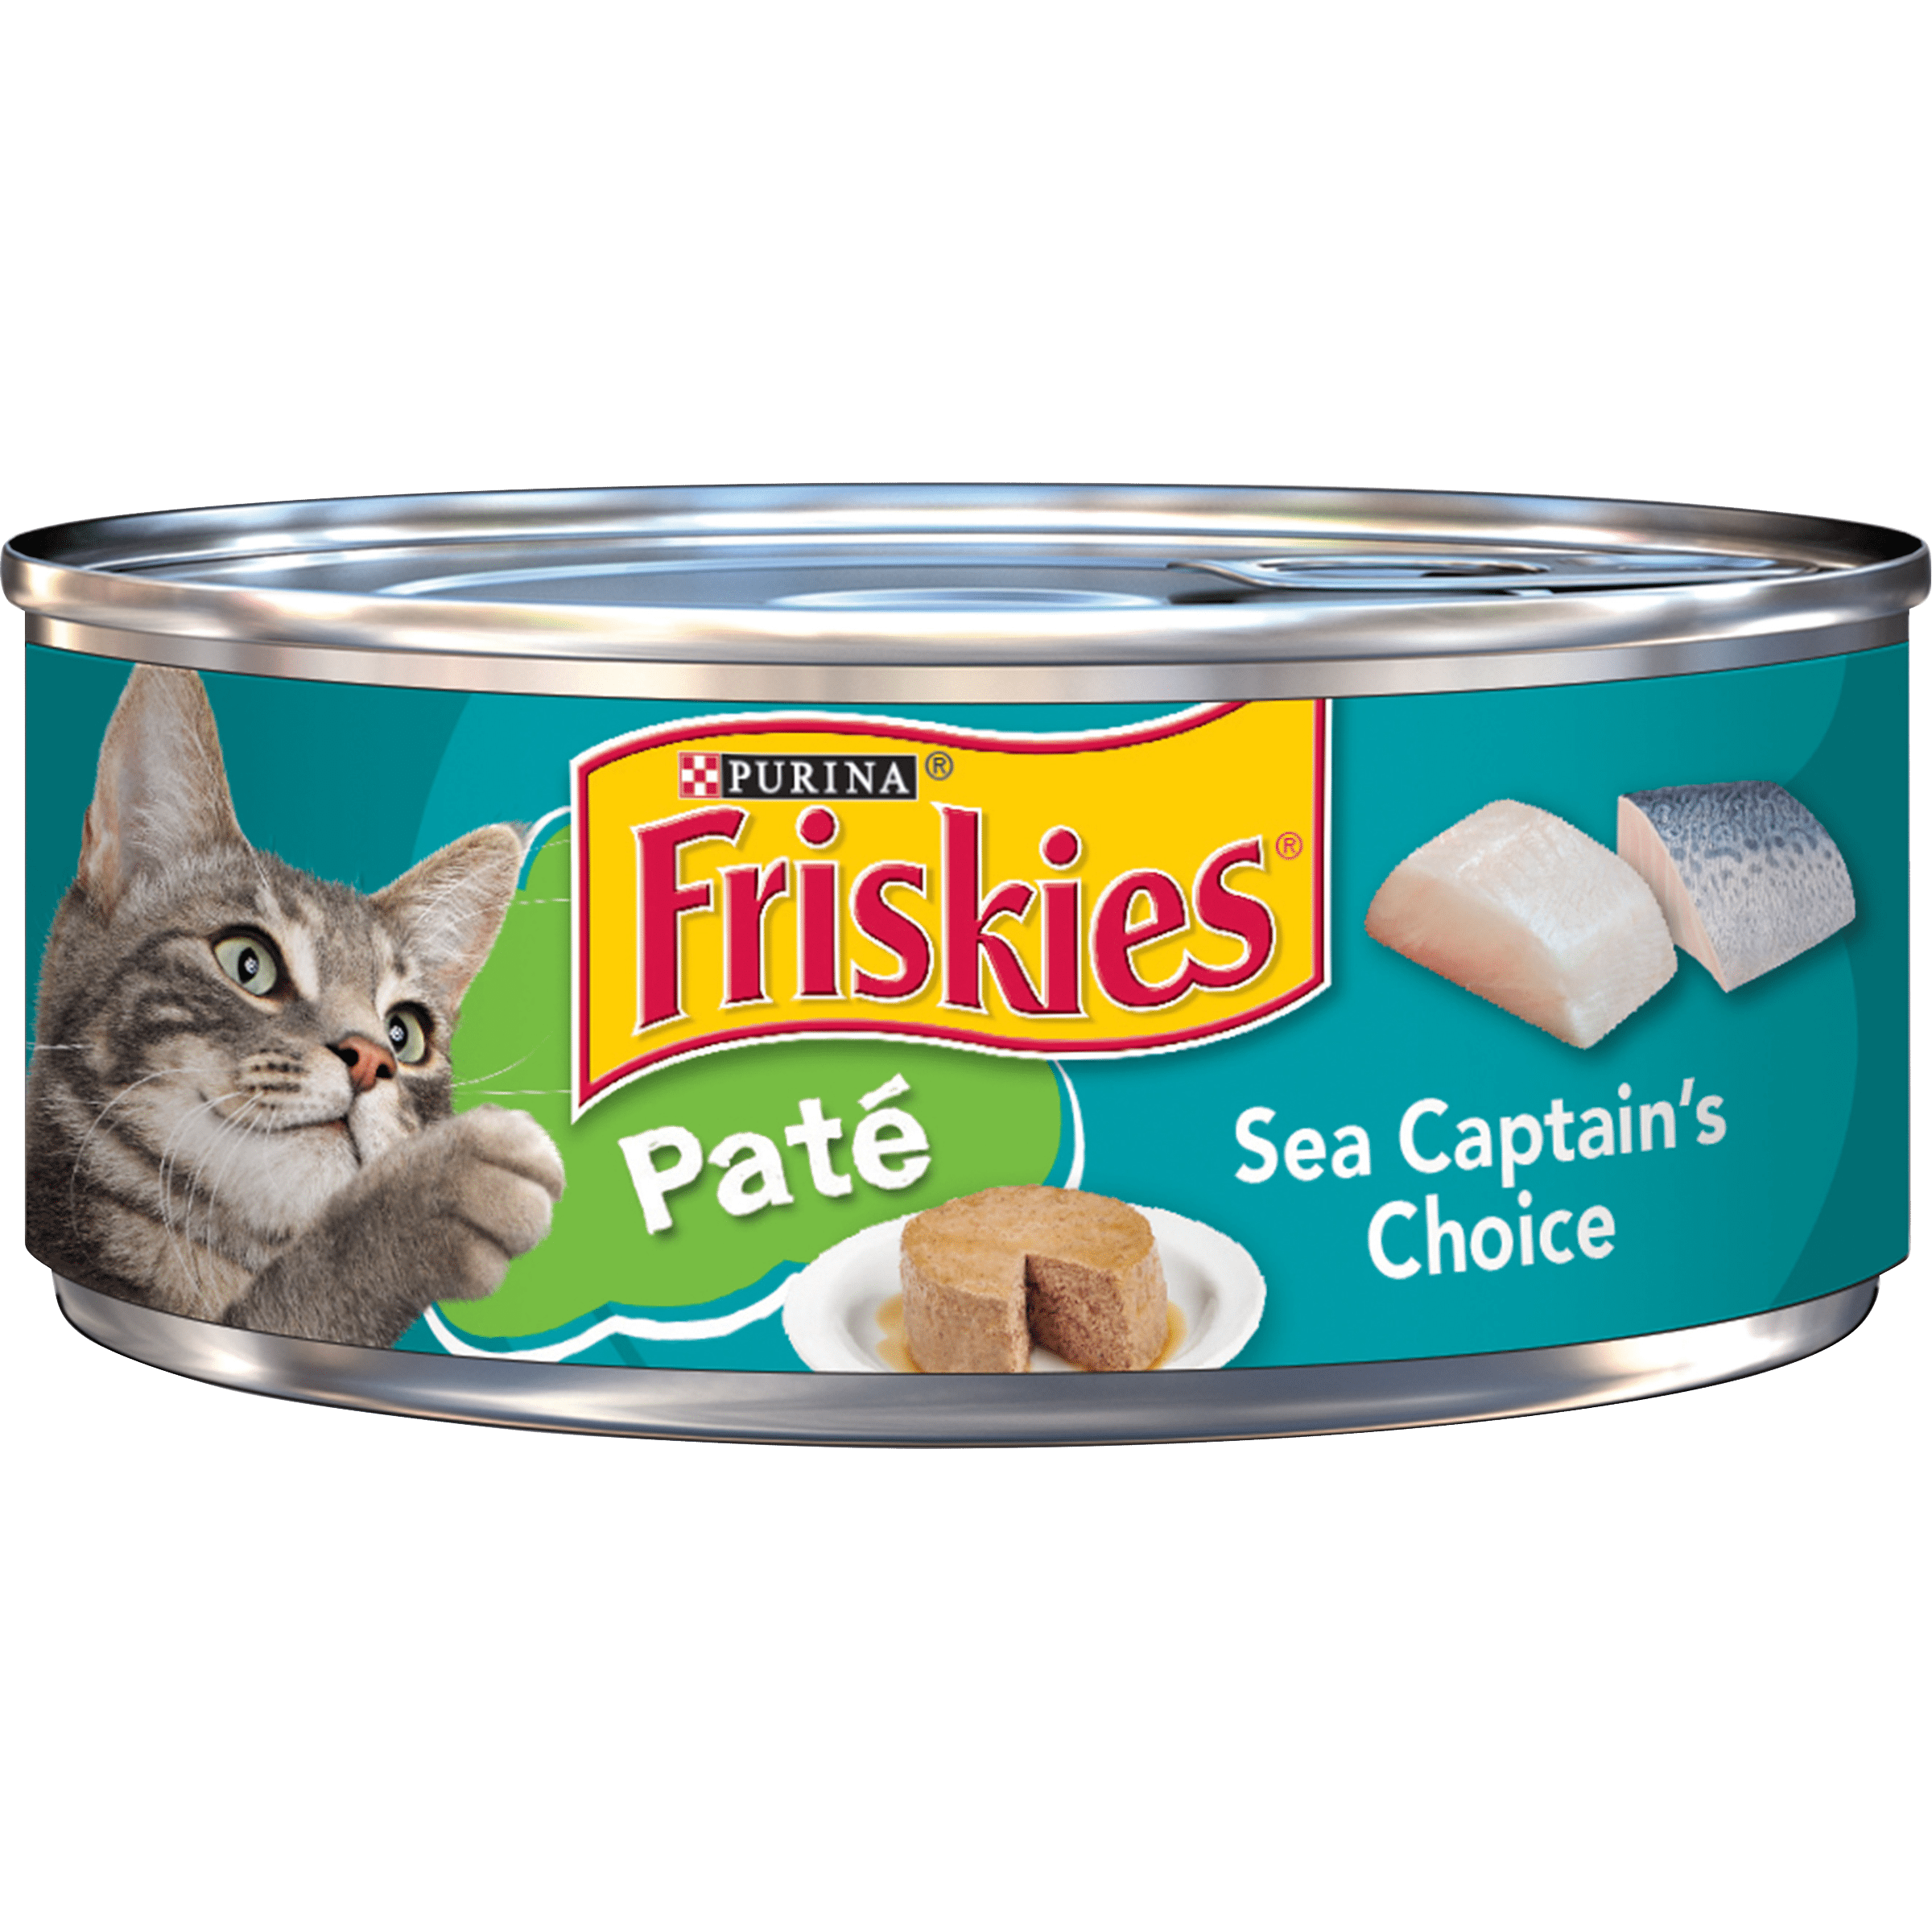 Friskies Pate Wet Cat Food, Sea Captain's Choice, 5.5 oz. Can Walmart